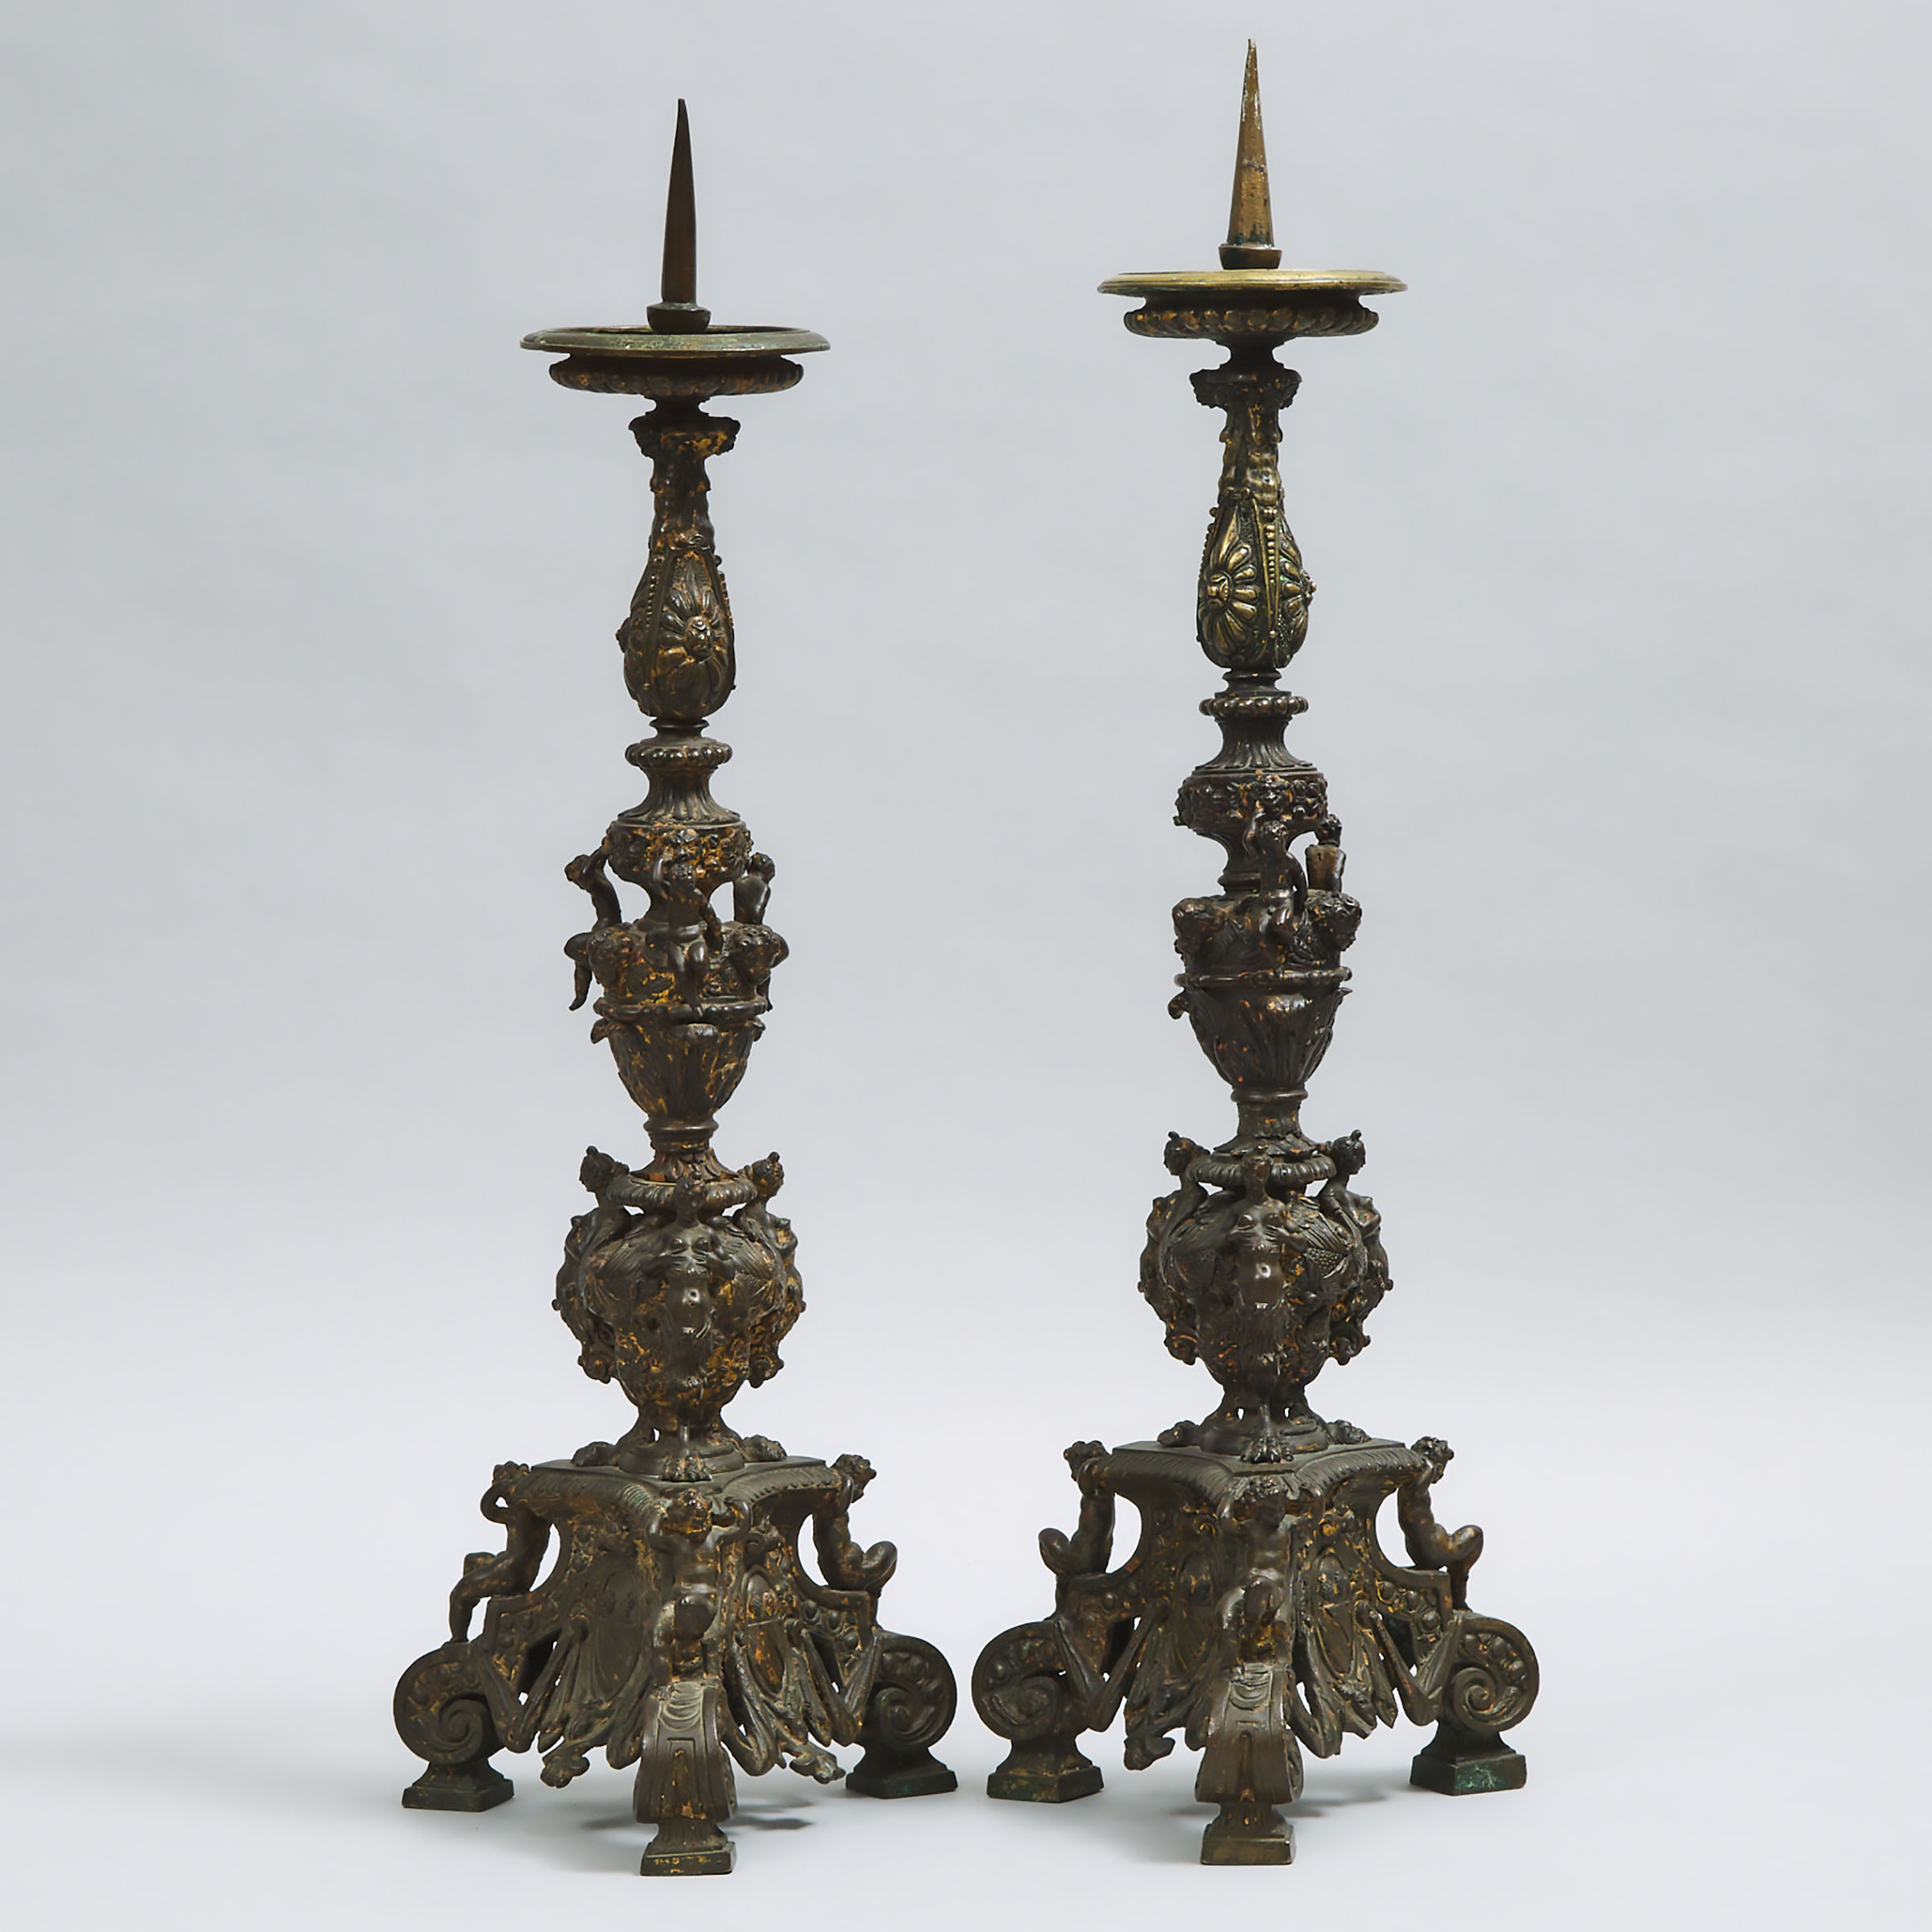 Pair of North Italian Renaissance Style Bronze Pricket Candlesticks, 19th century